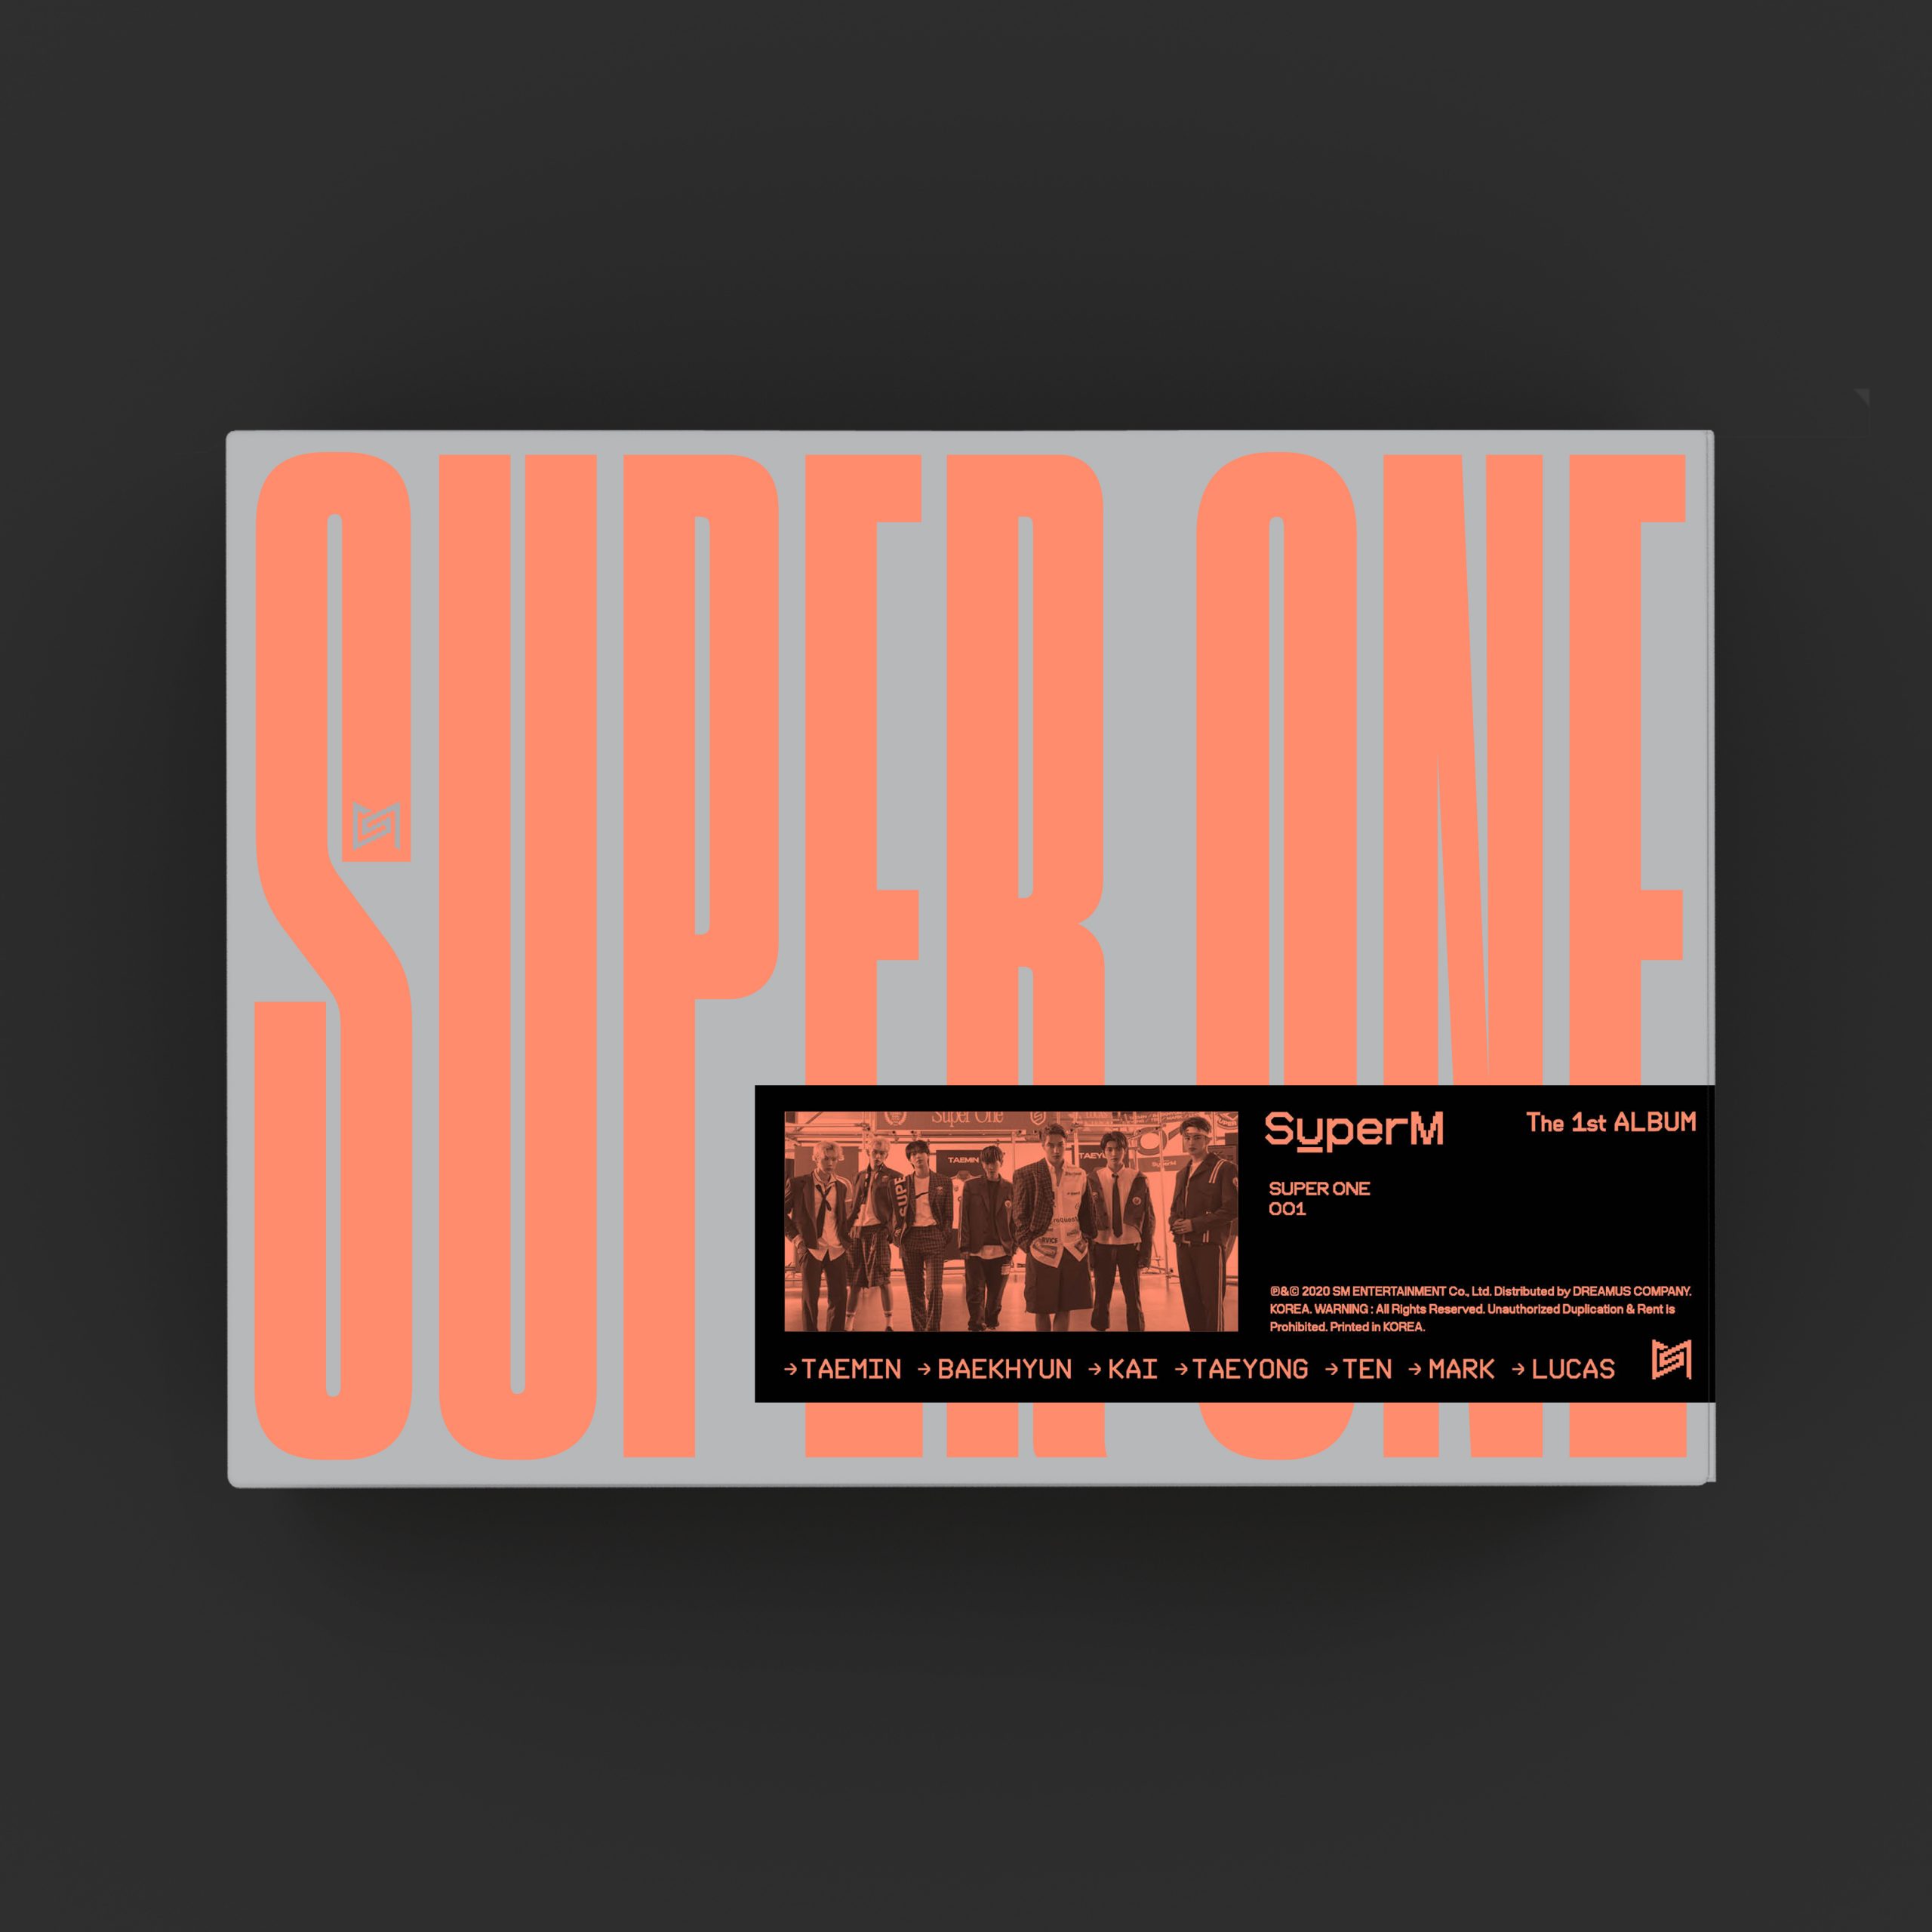 SuperM、１stフルアルバム『Super One』のアジア盤が日本でも販売決定 ...